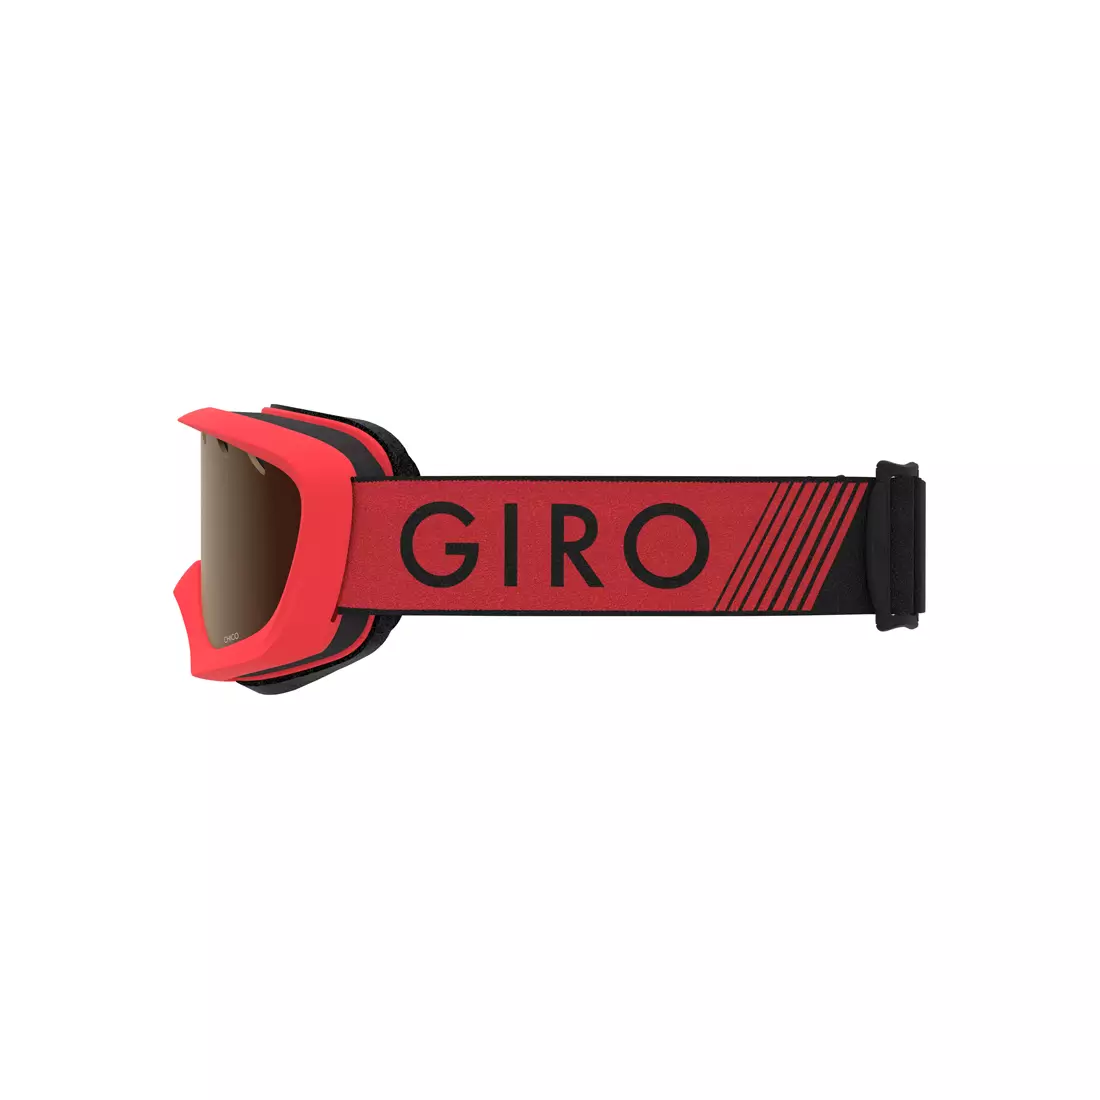 Junior sí / snowboard szemüveg CHICO RED BLACK ZOOM GR-7083076